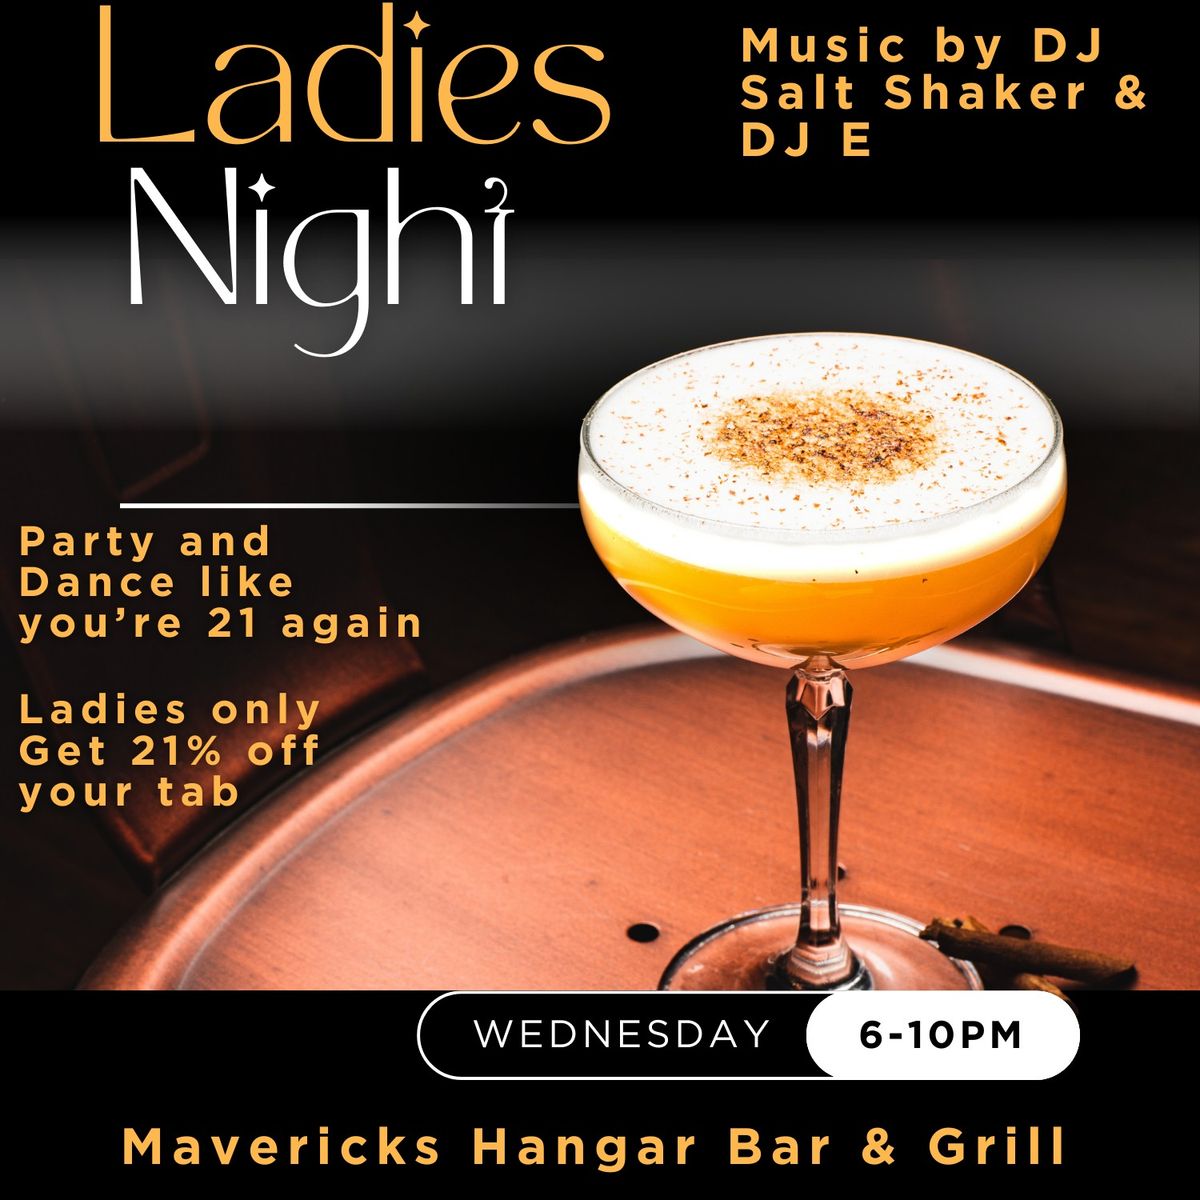 Ladies Night Mavericks Hangar Bar & Grill